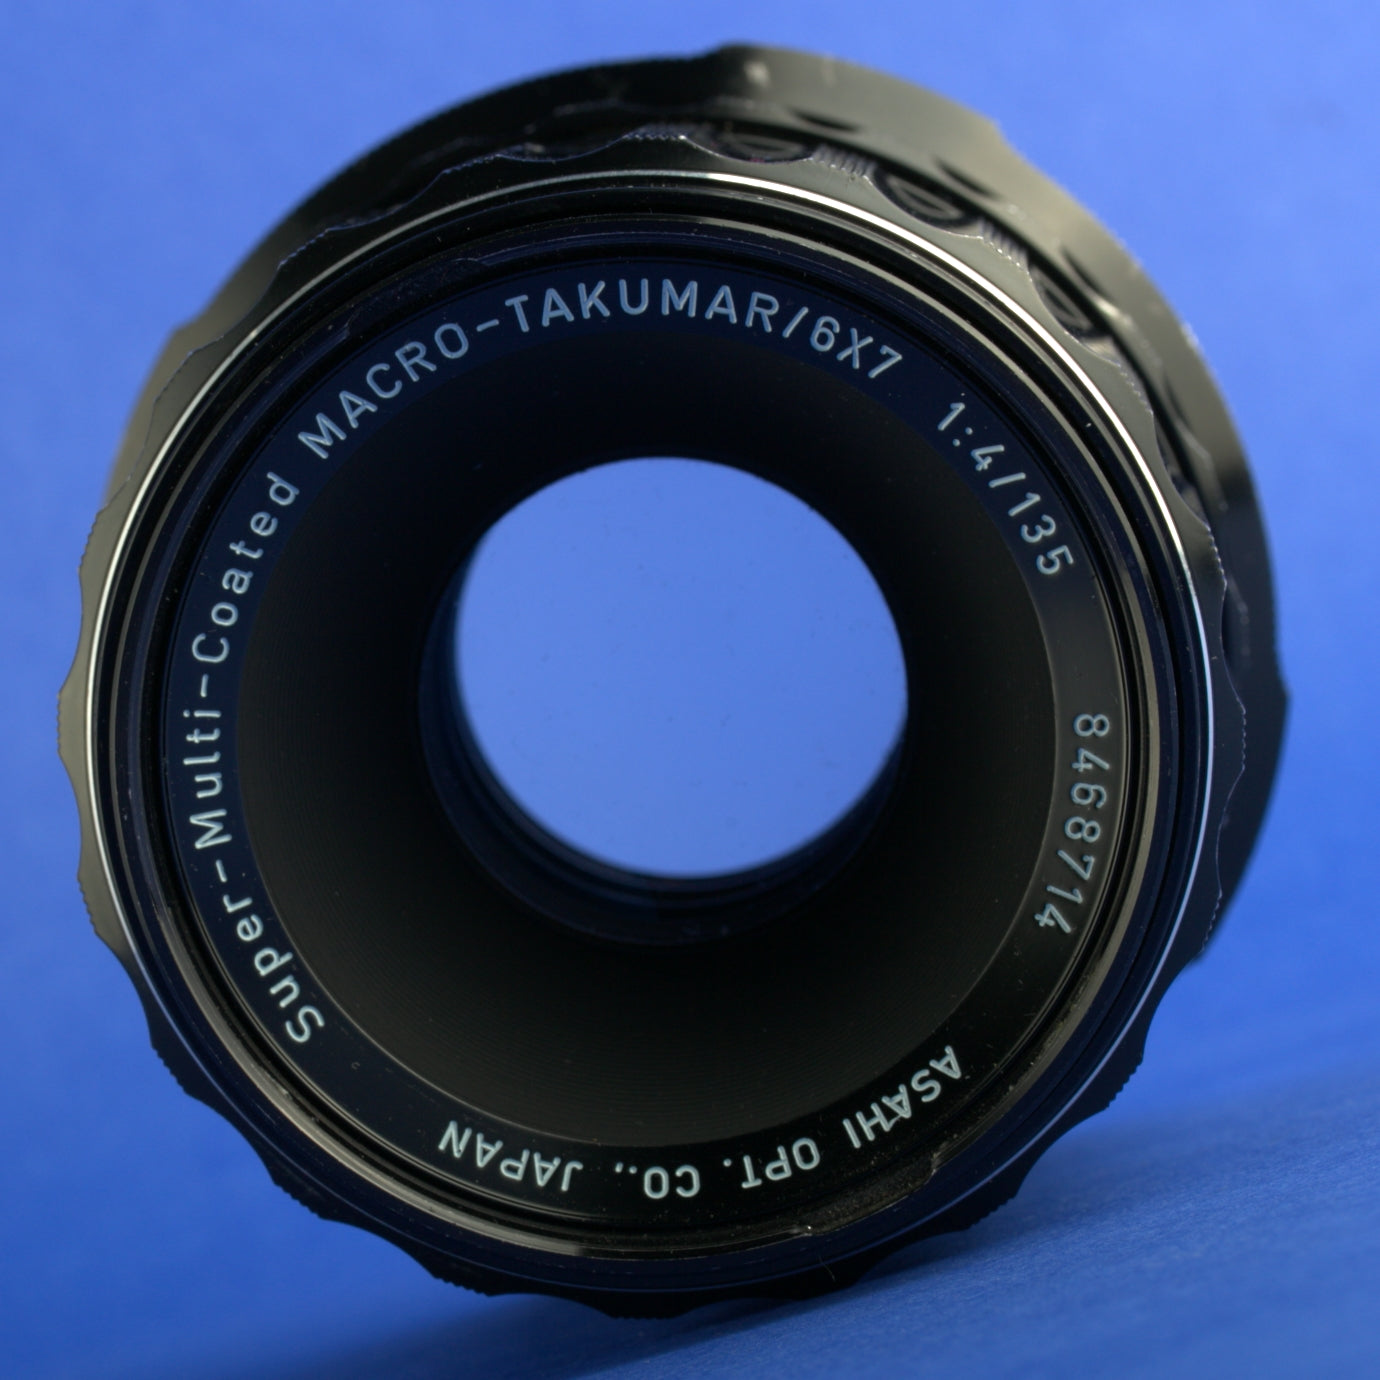 Pentax 6x7 Macro-Takumar 135mm F4 Super-Multi-Coated Lens Film Tested